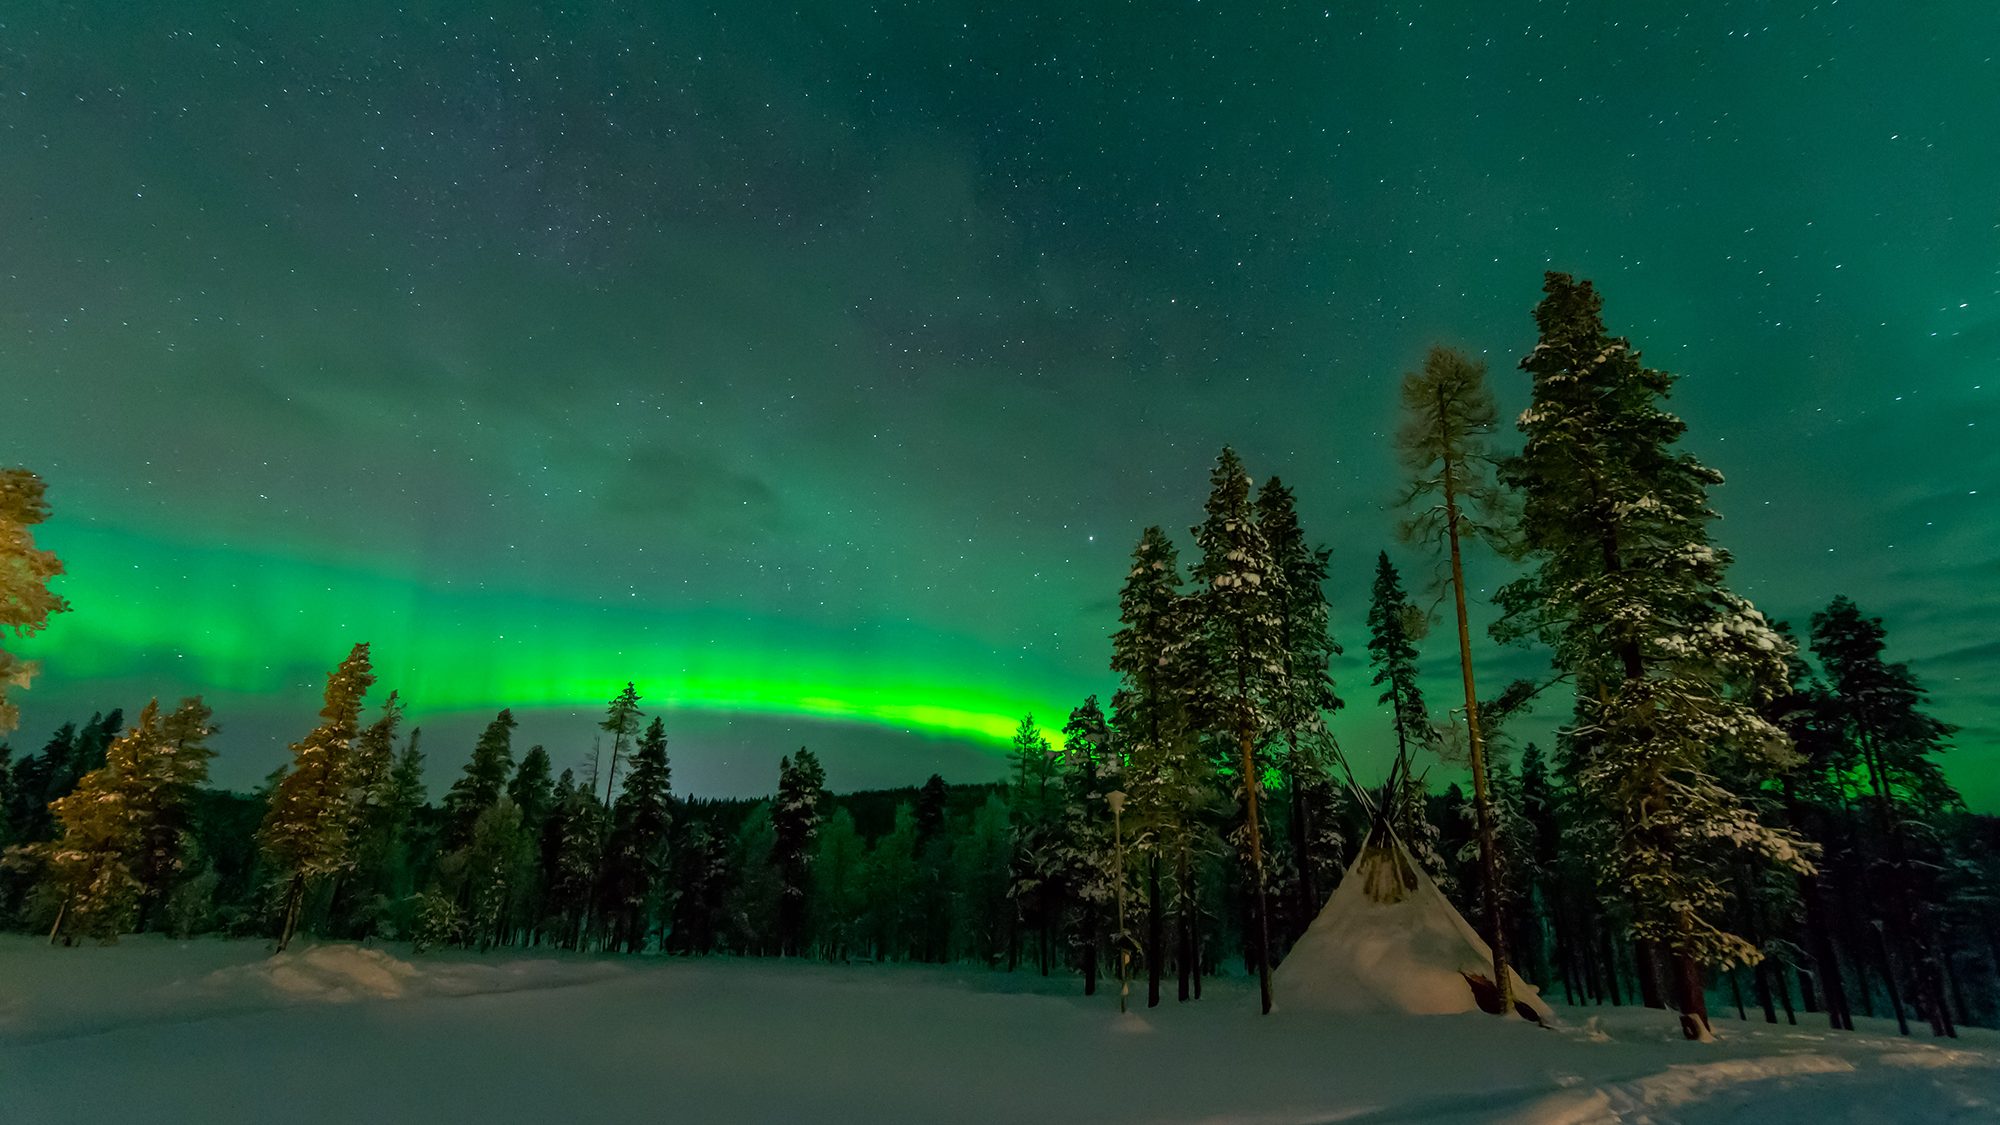 Aurore boreali – Northern Lights